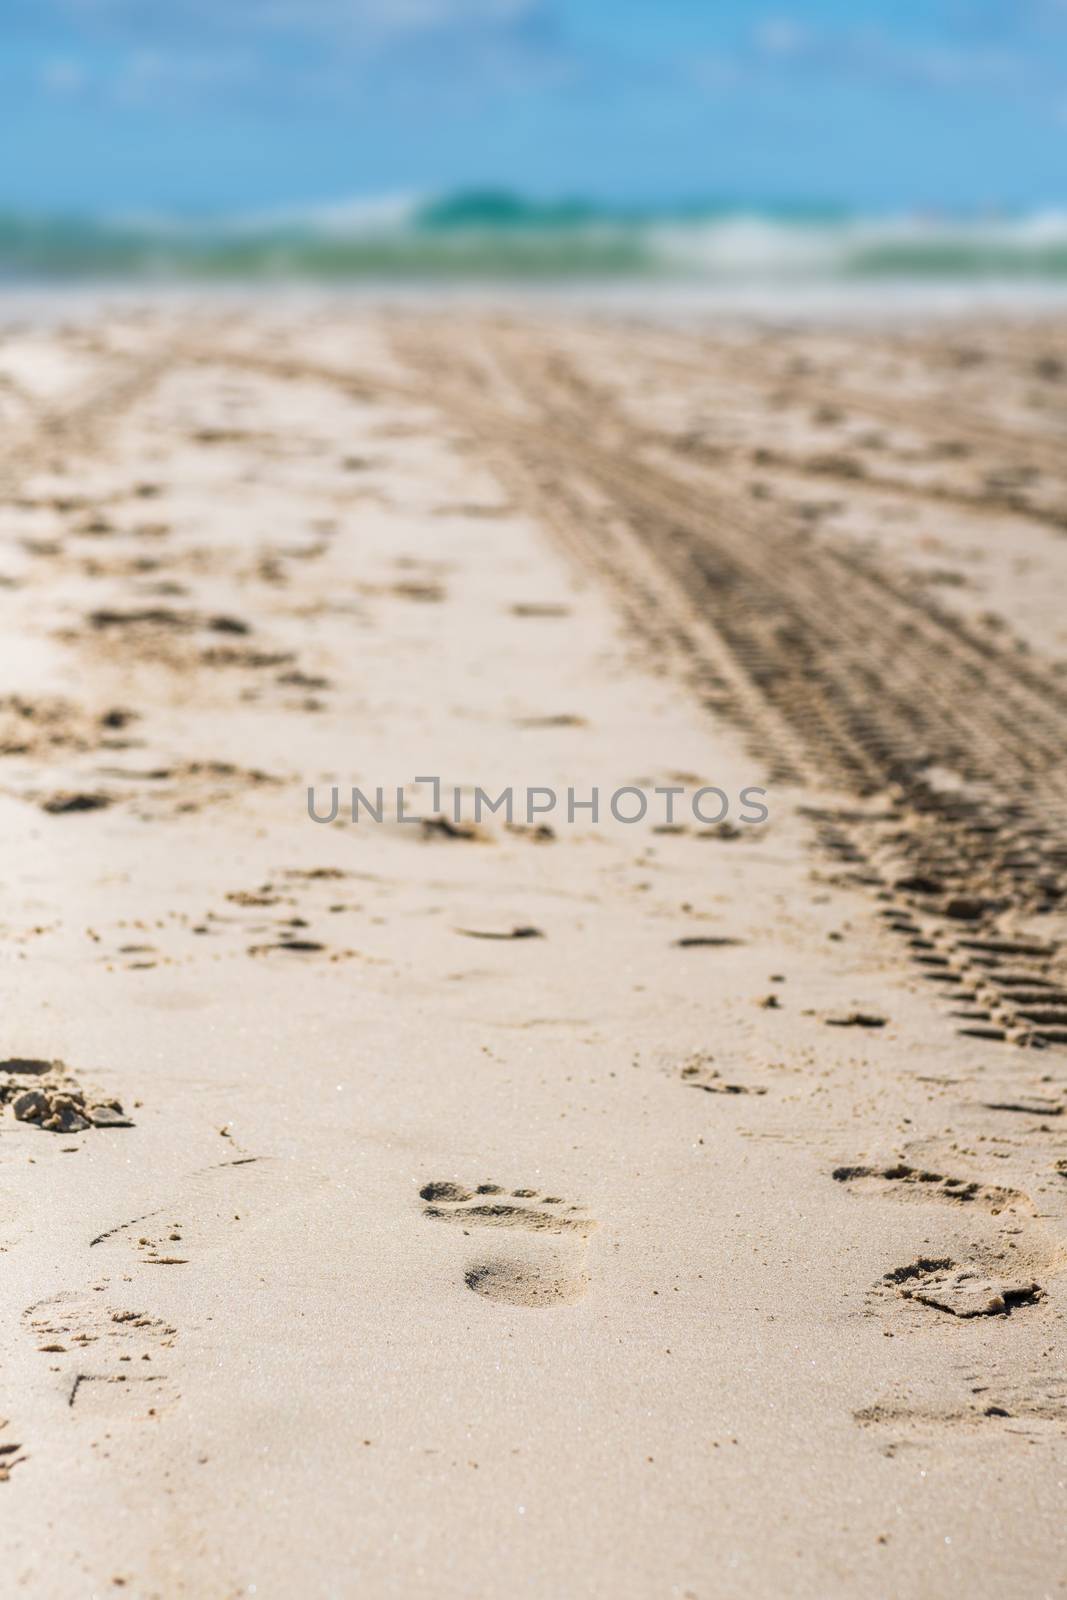 landscape Mediterranean Sea, footprints in the sand